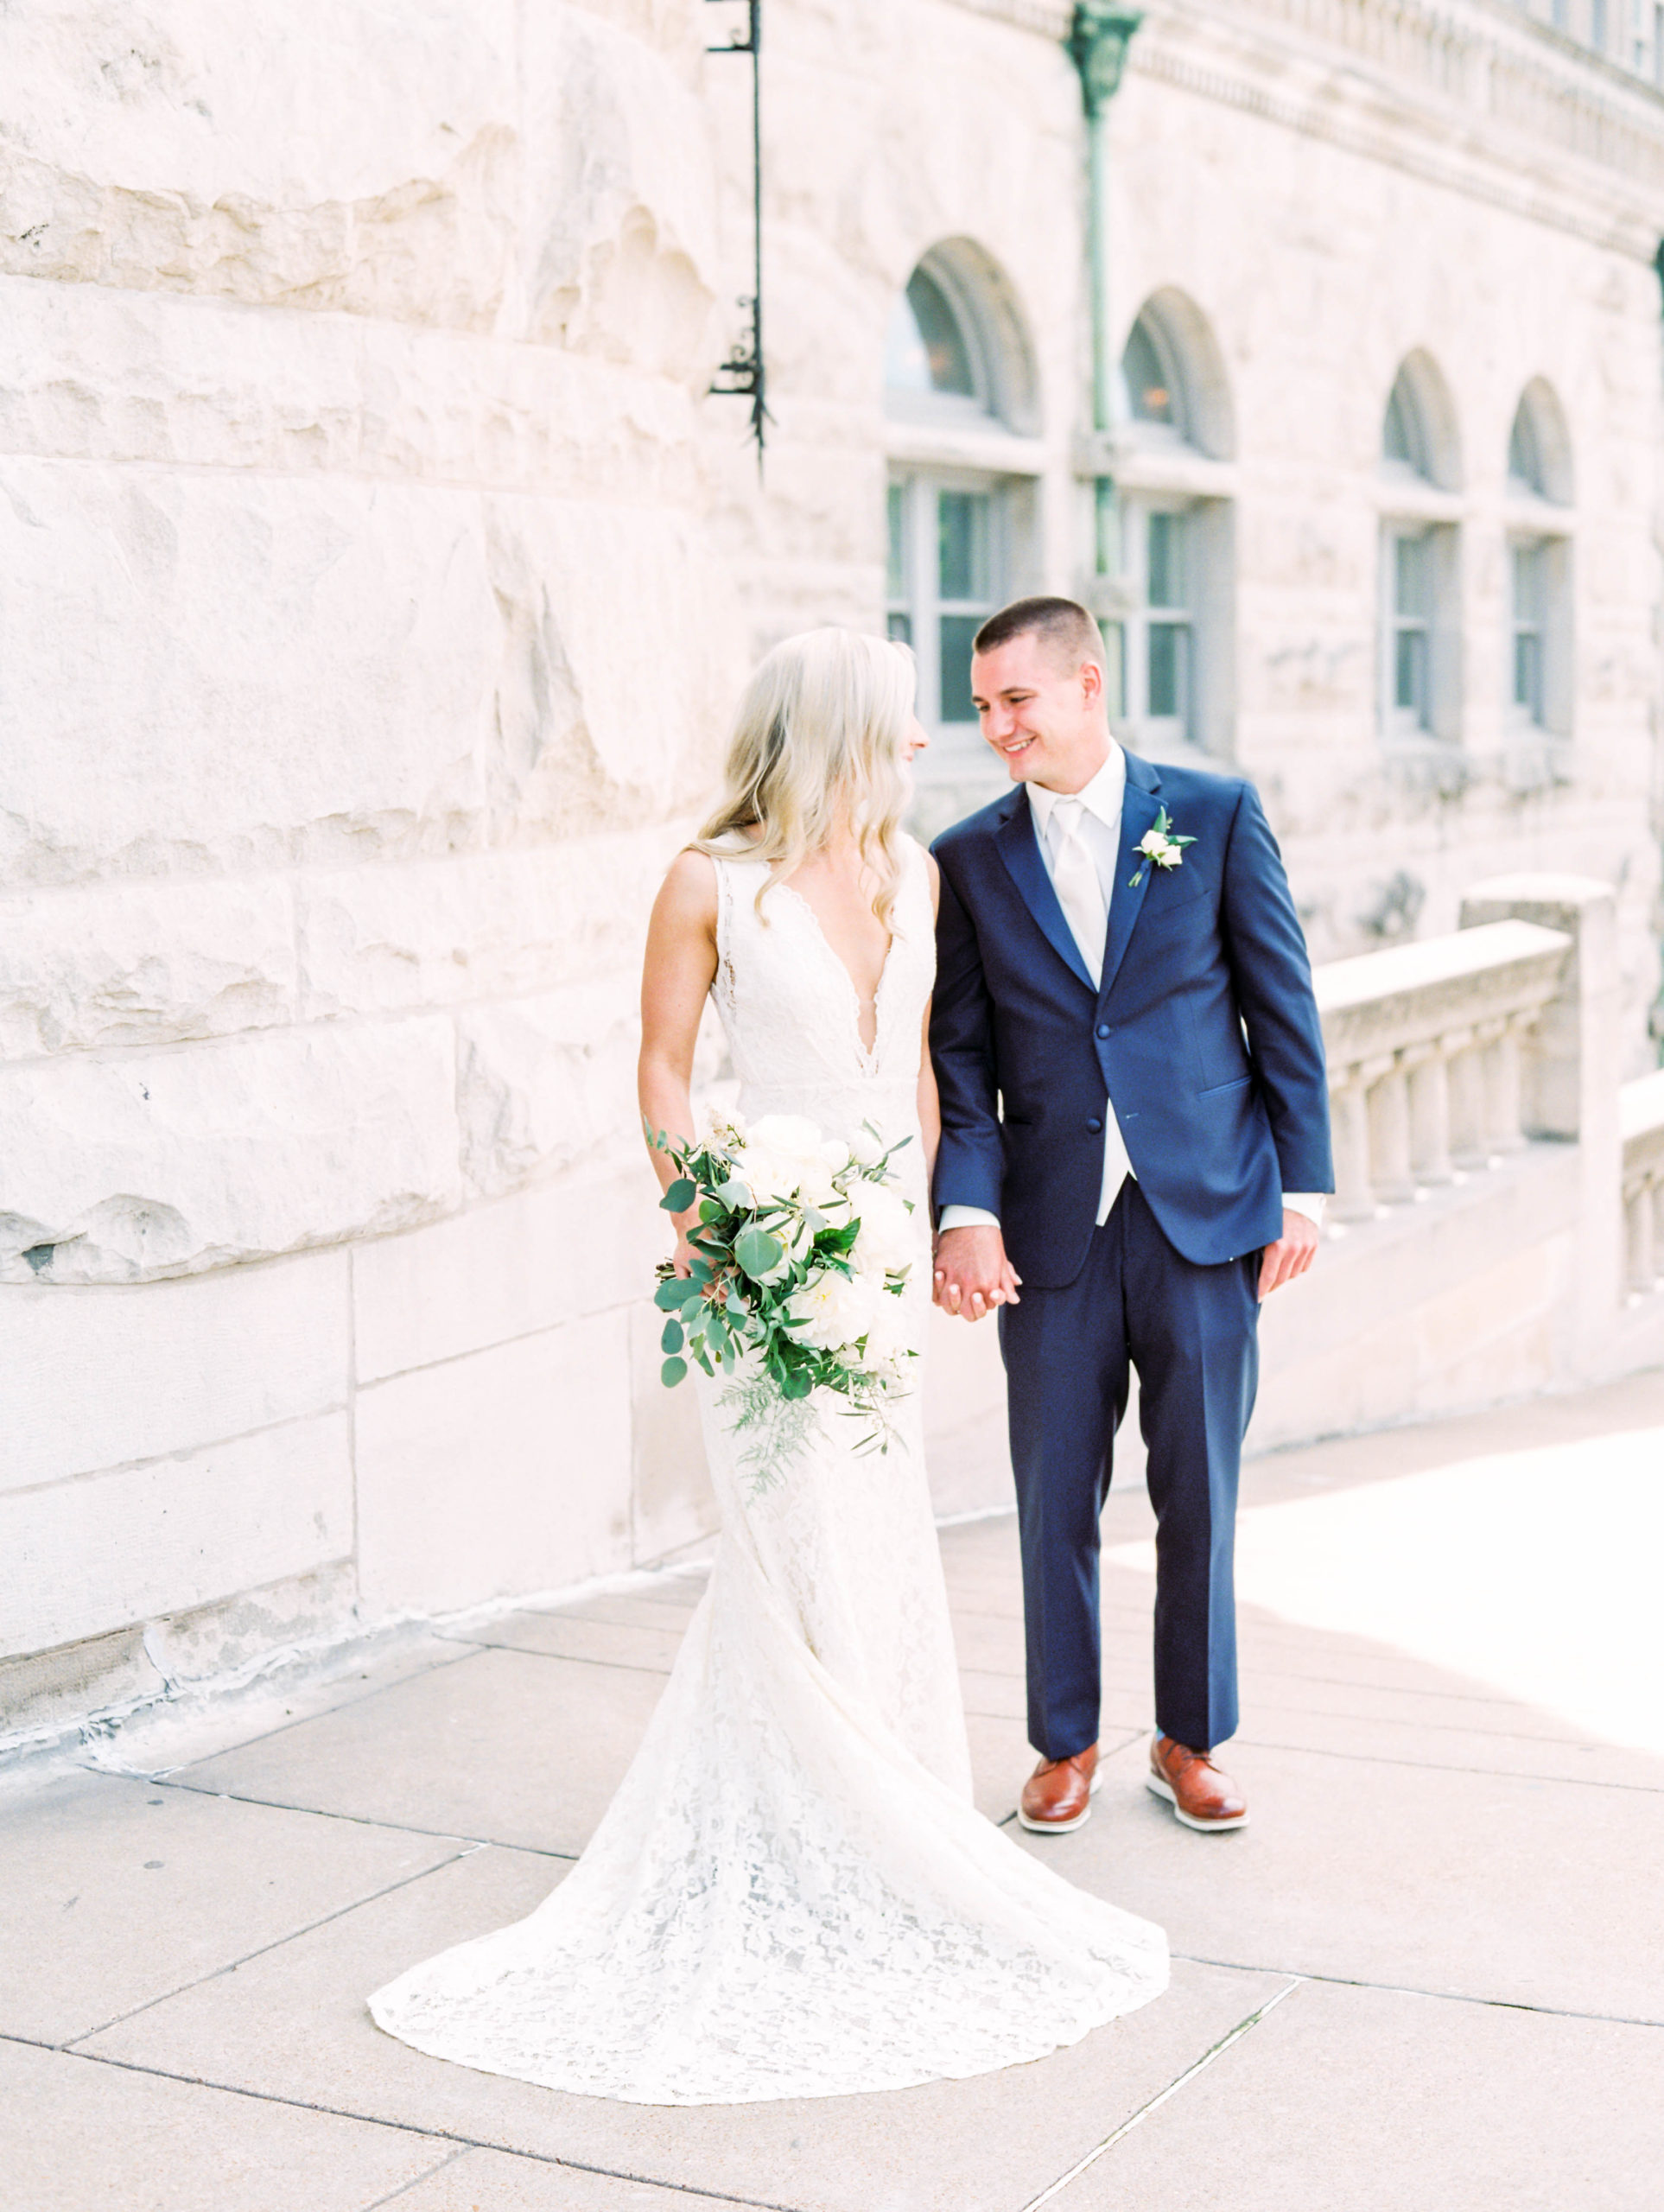 St Louis Union Station wedding photos